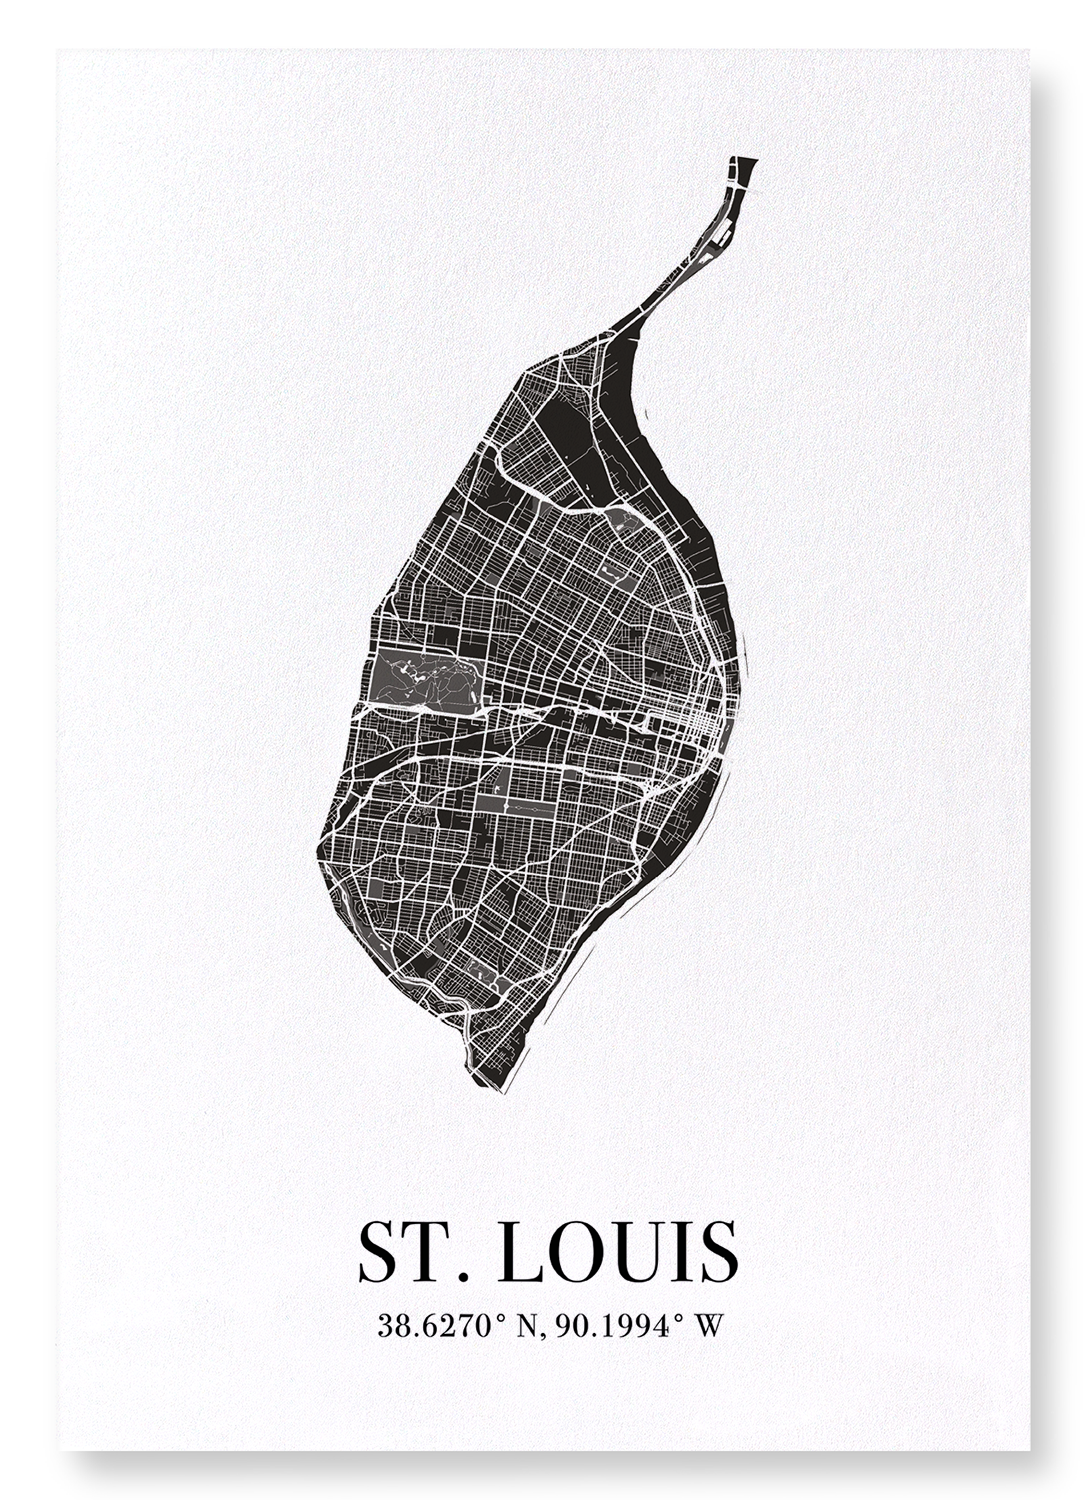 ST. LOUIS CUTOUT: Map Cutout Art Print